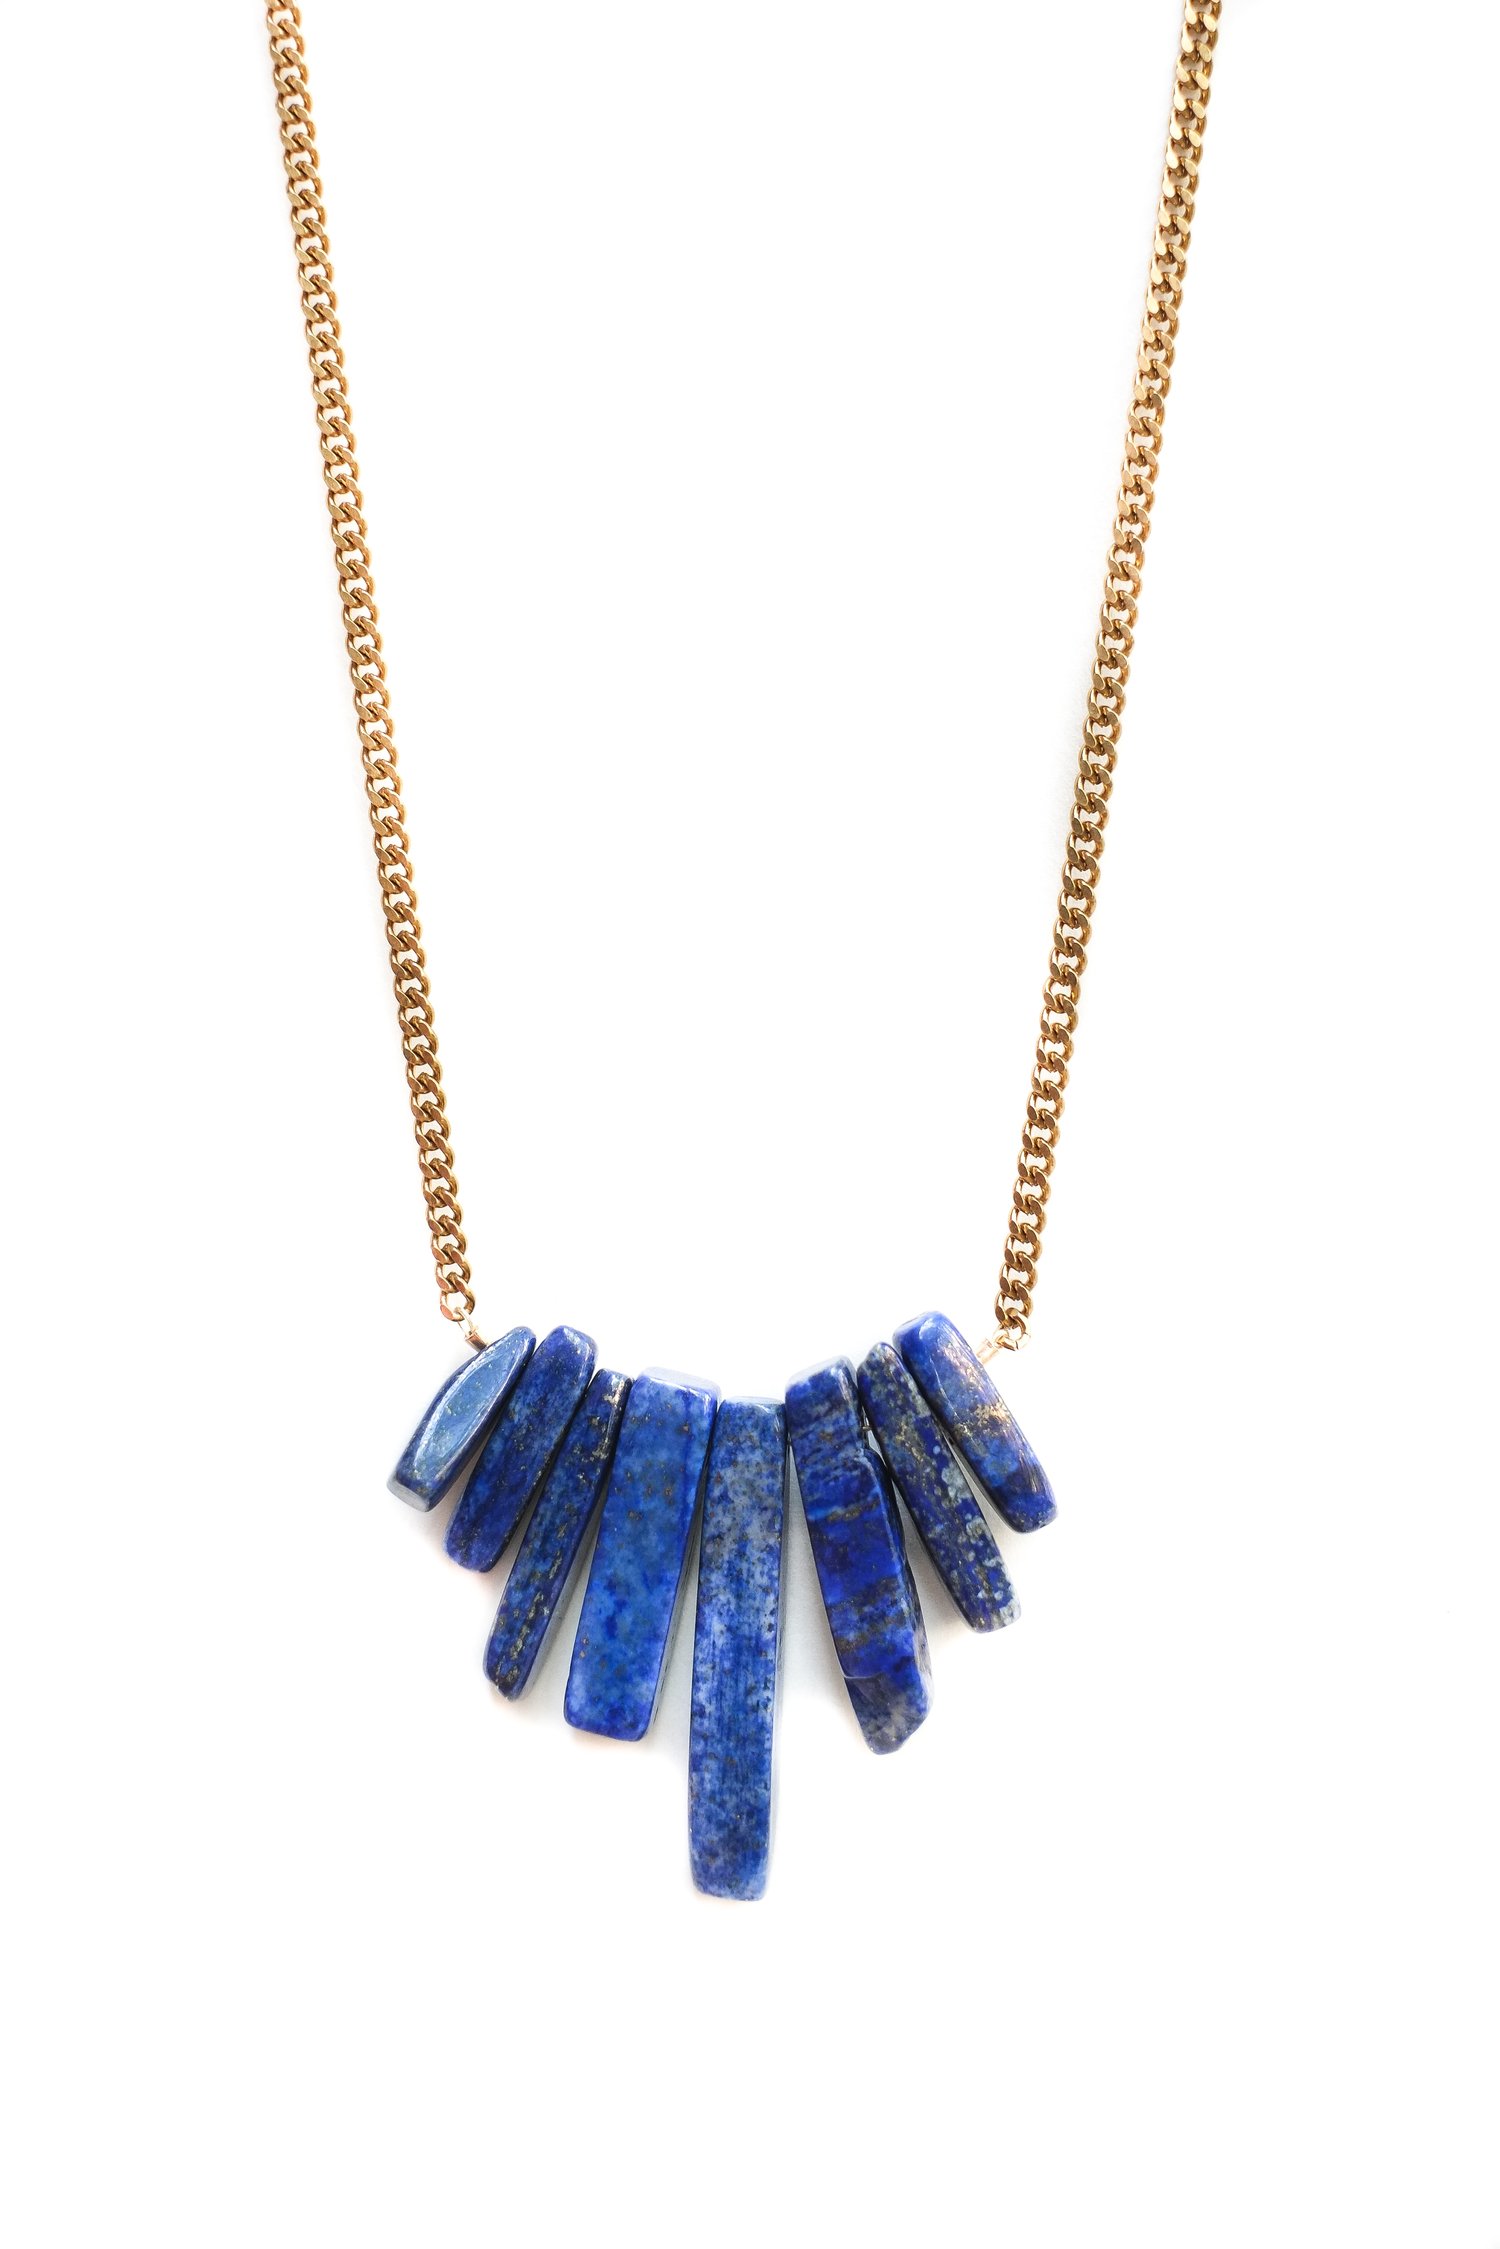 Image of Blue Nile Necklace